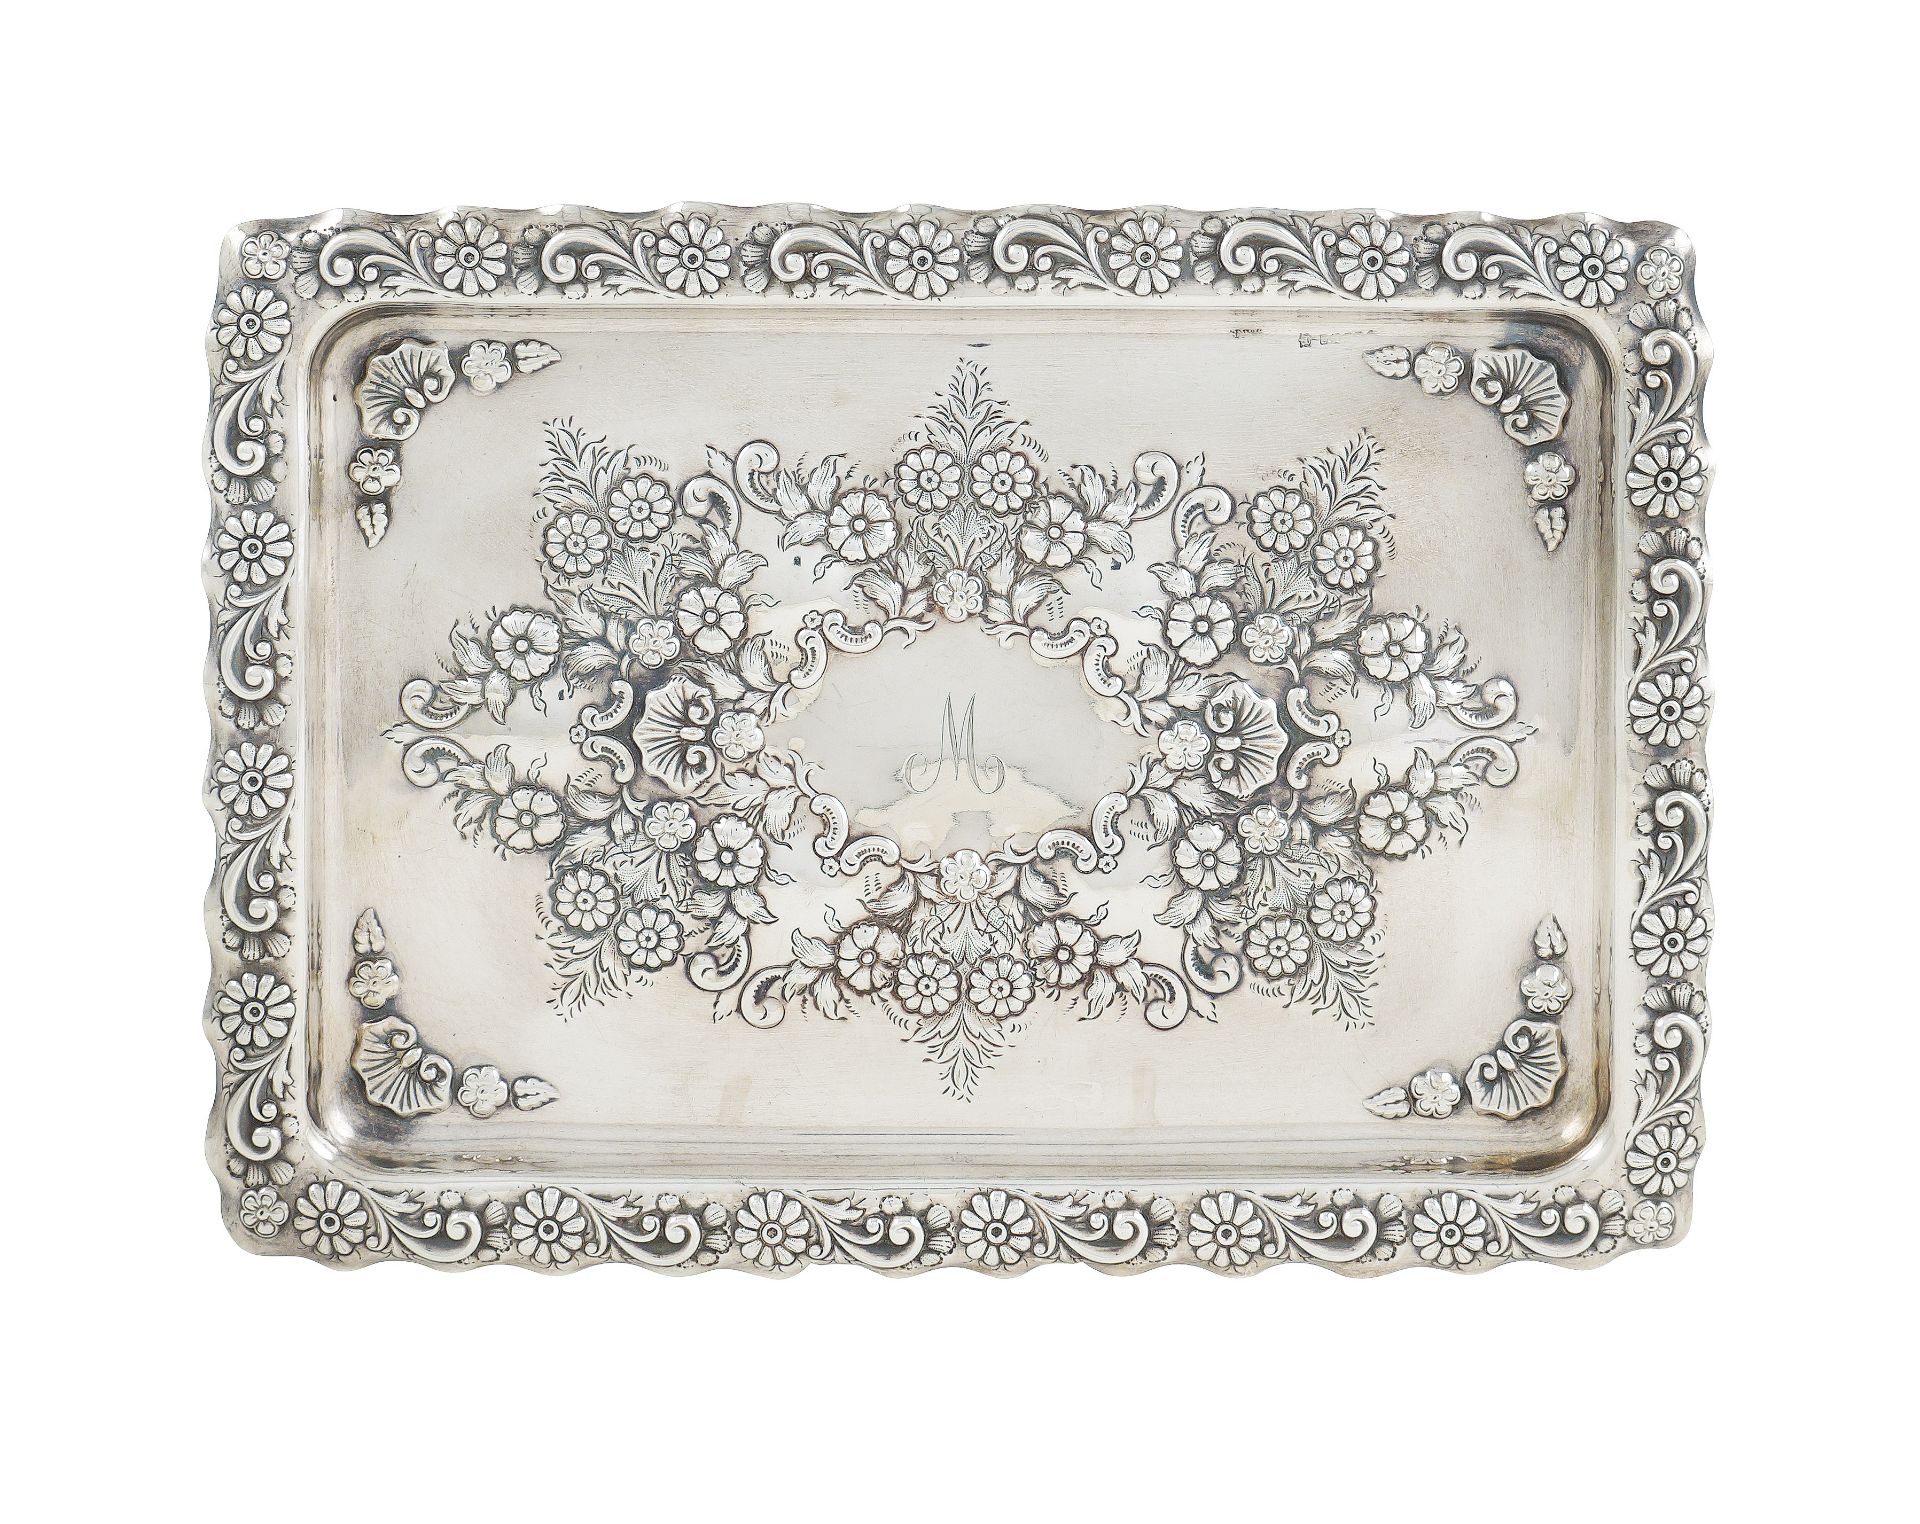 A silver rectangular plate late 19th century 23x32,5 cm.